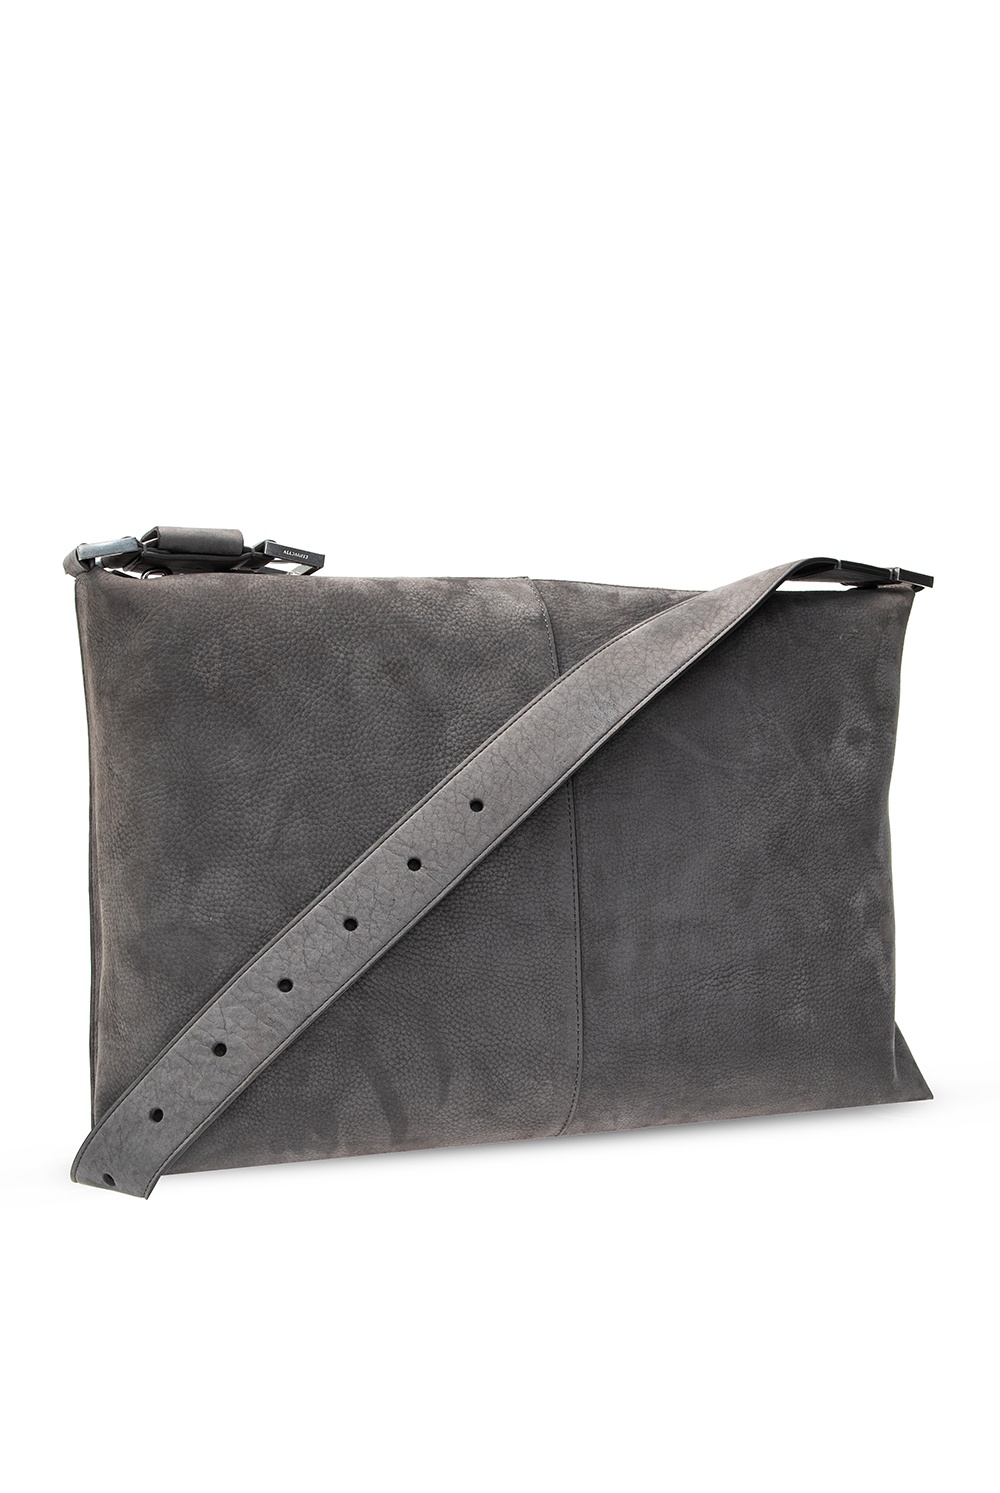 CHANEL-New-Travel-Line-Nylon-Jacquard-Leather-Mini-Bag-A15828